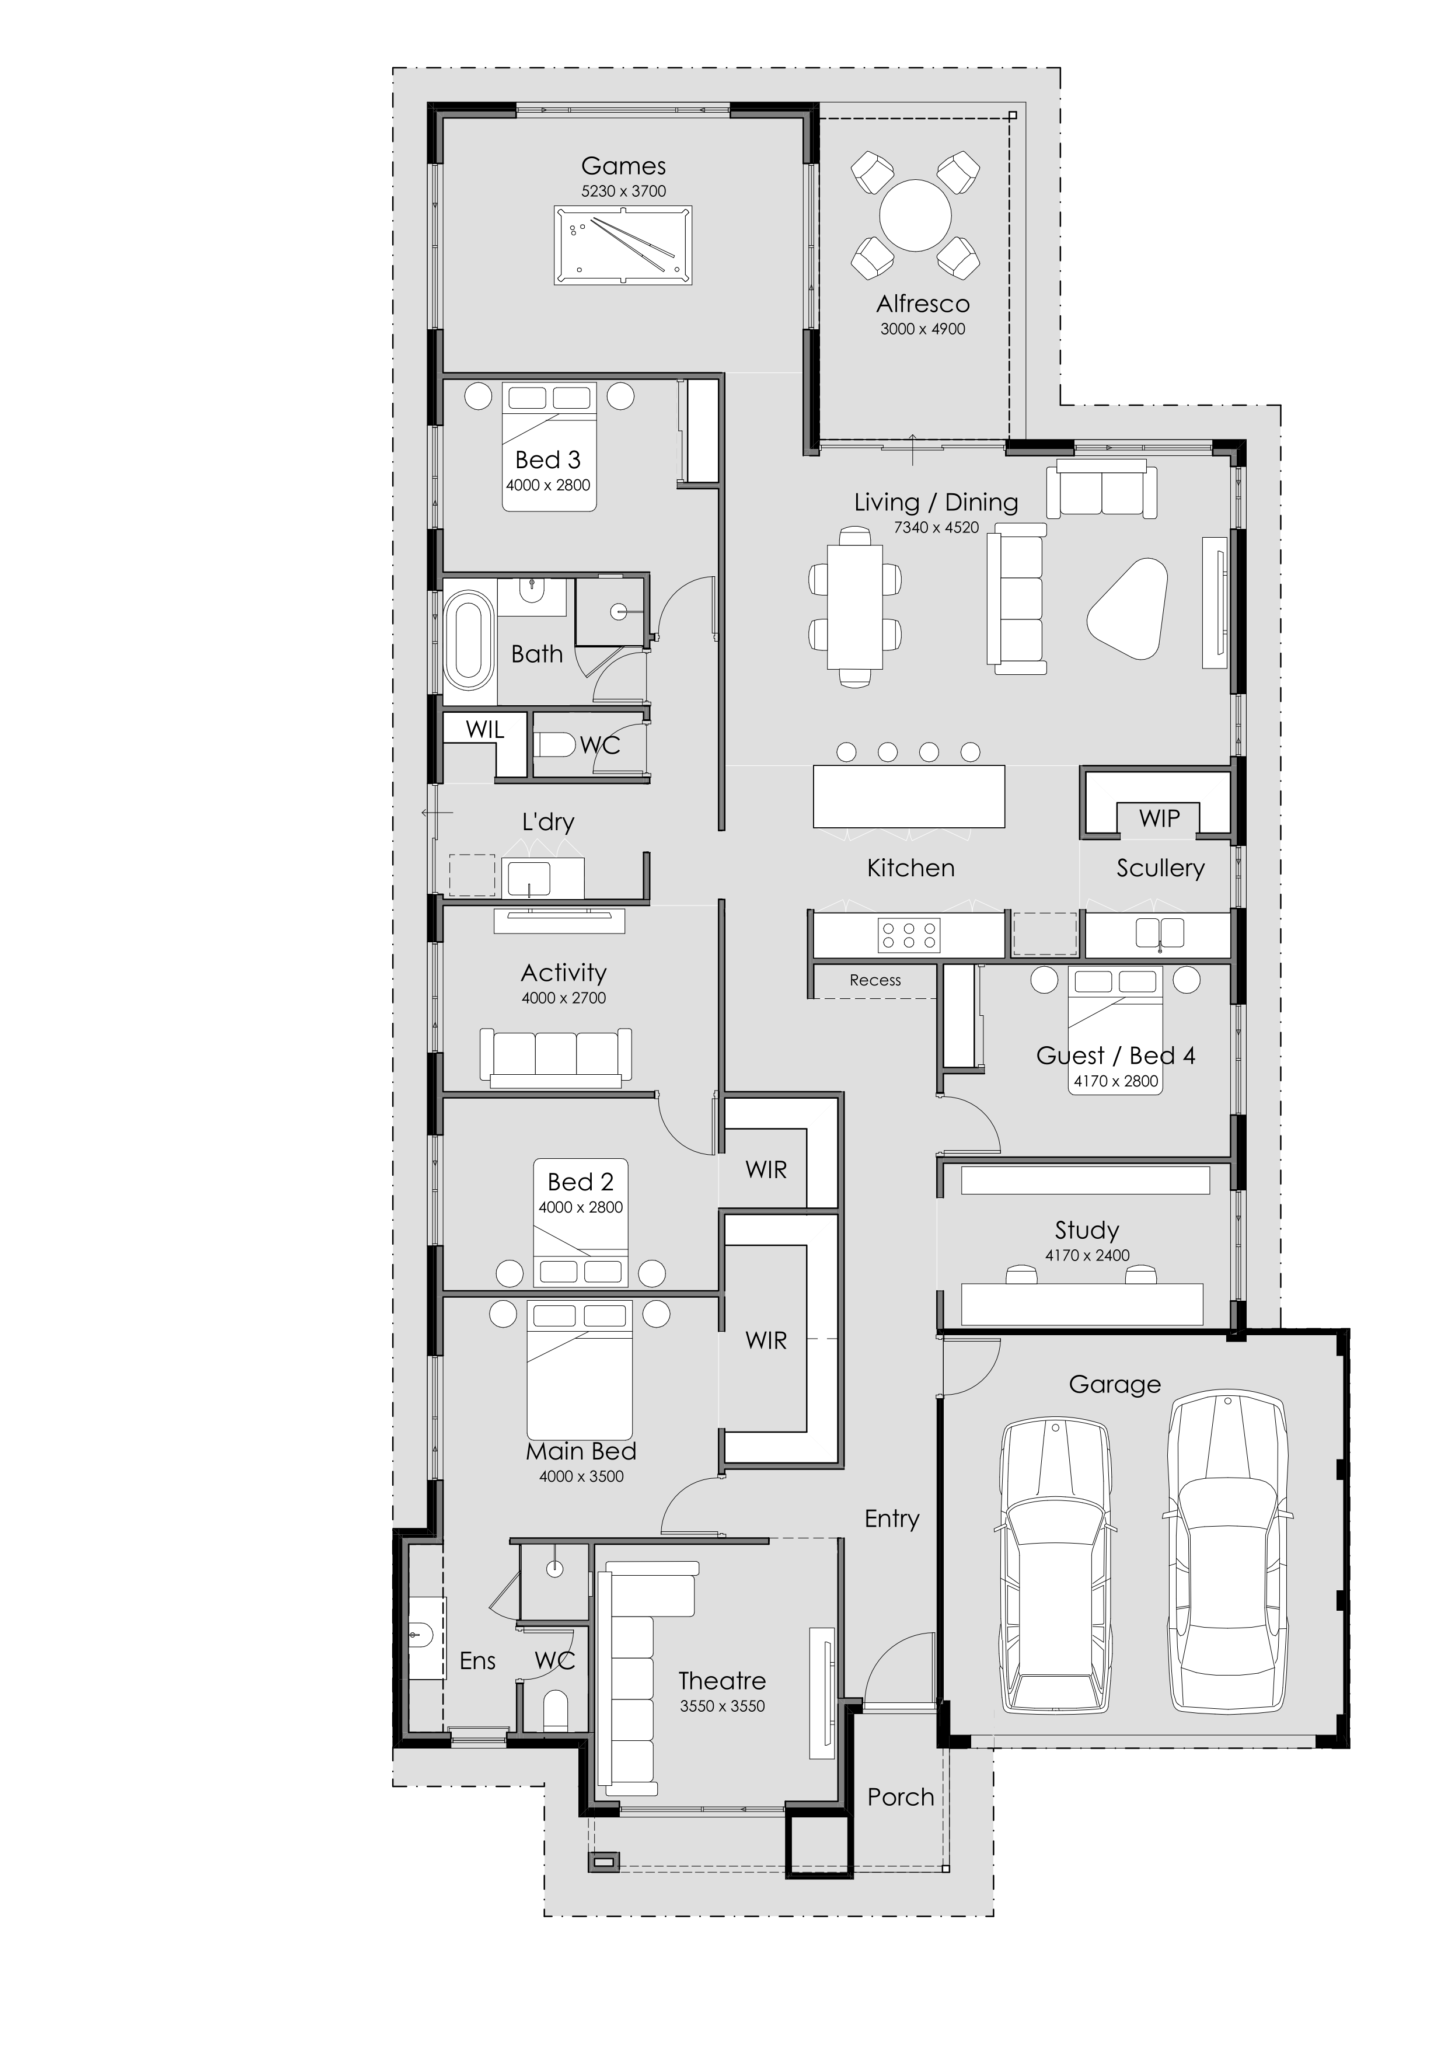 Home Designs Perth - House Plans - Single Storey Home Designs